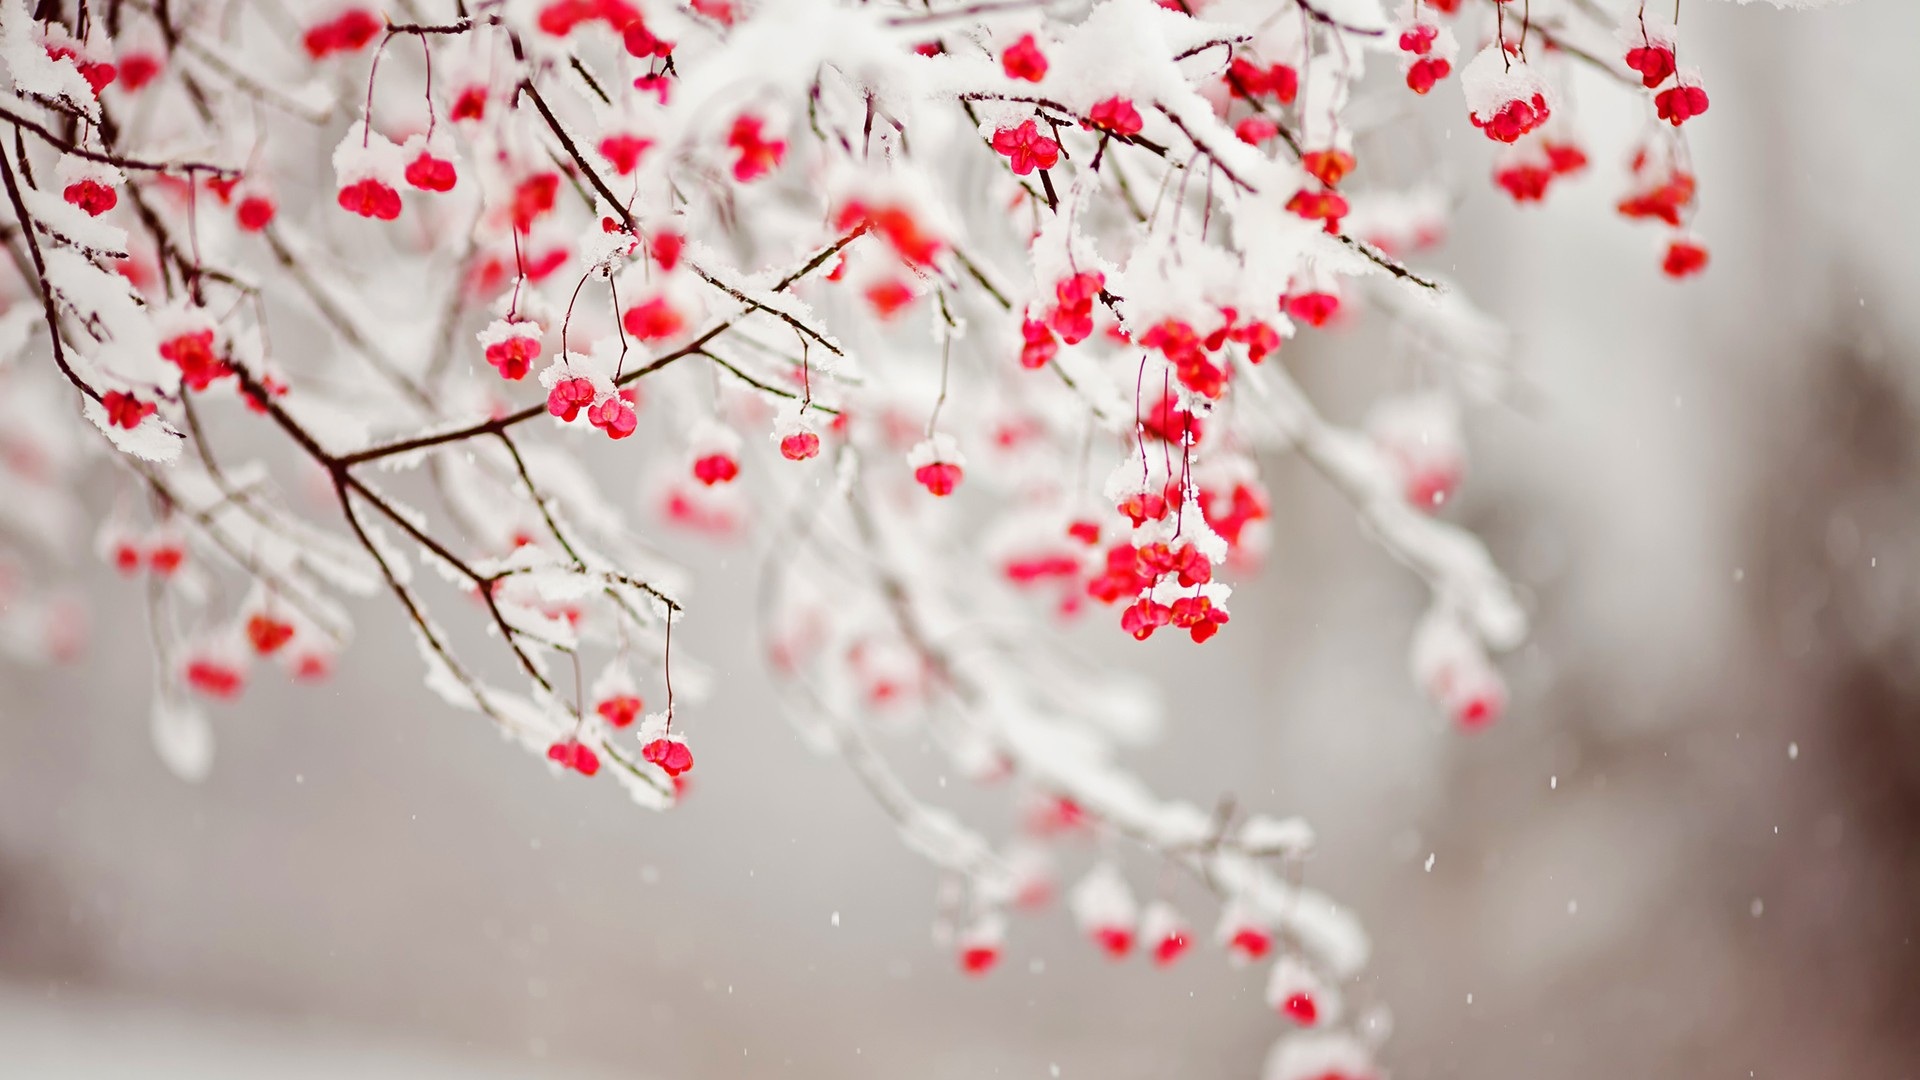 Red Berries In Snow - Wallpaper #40452